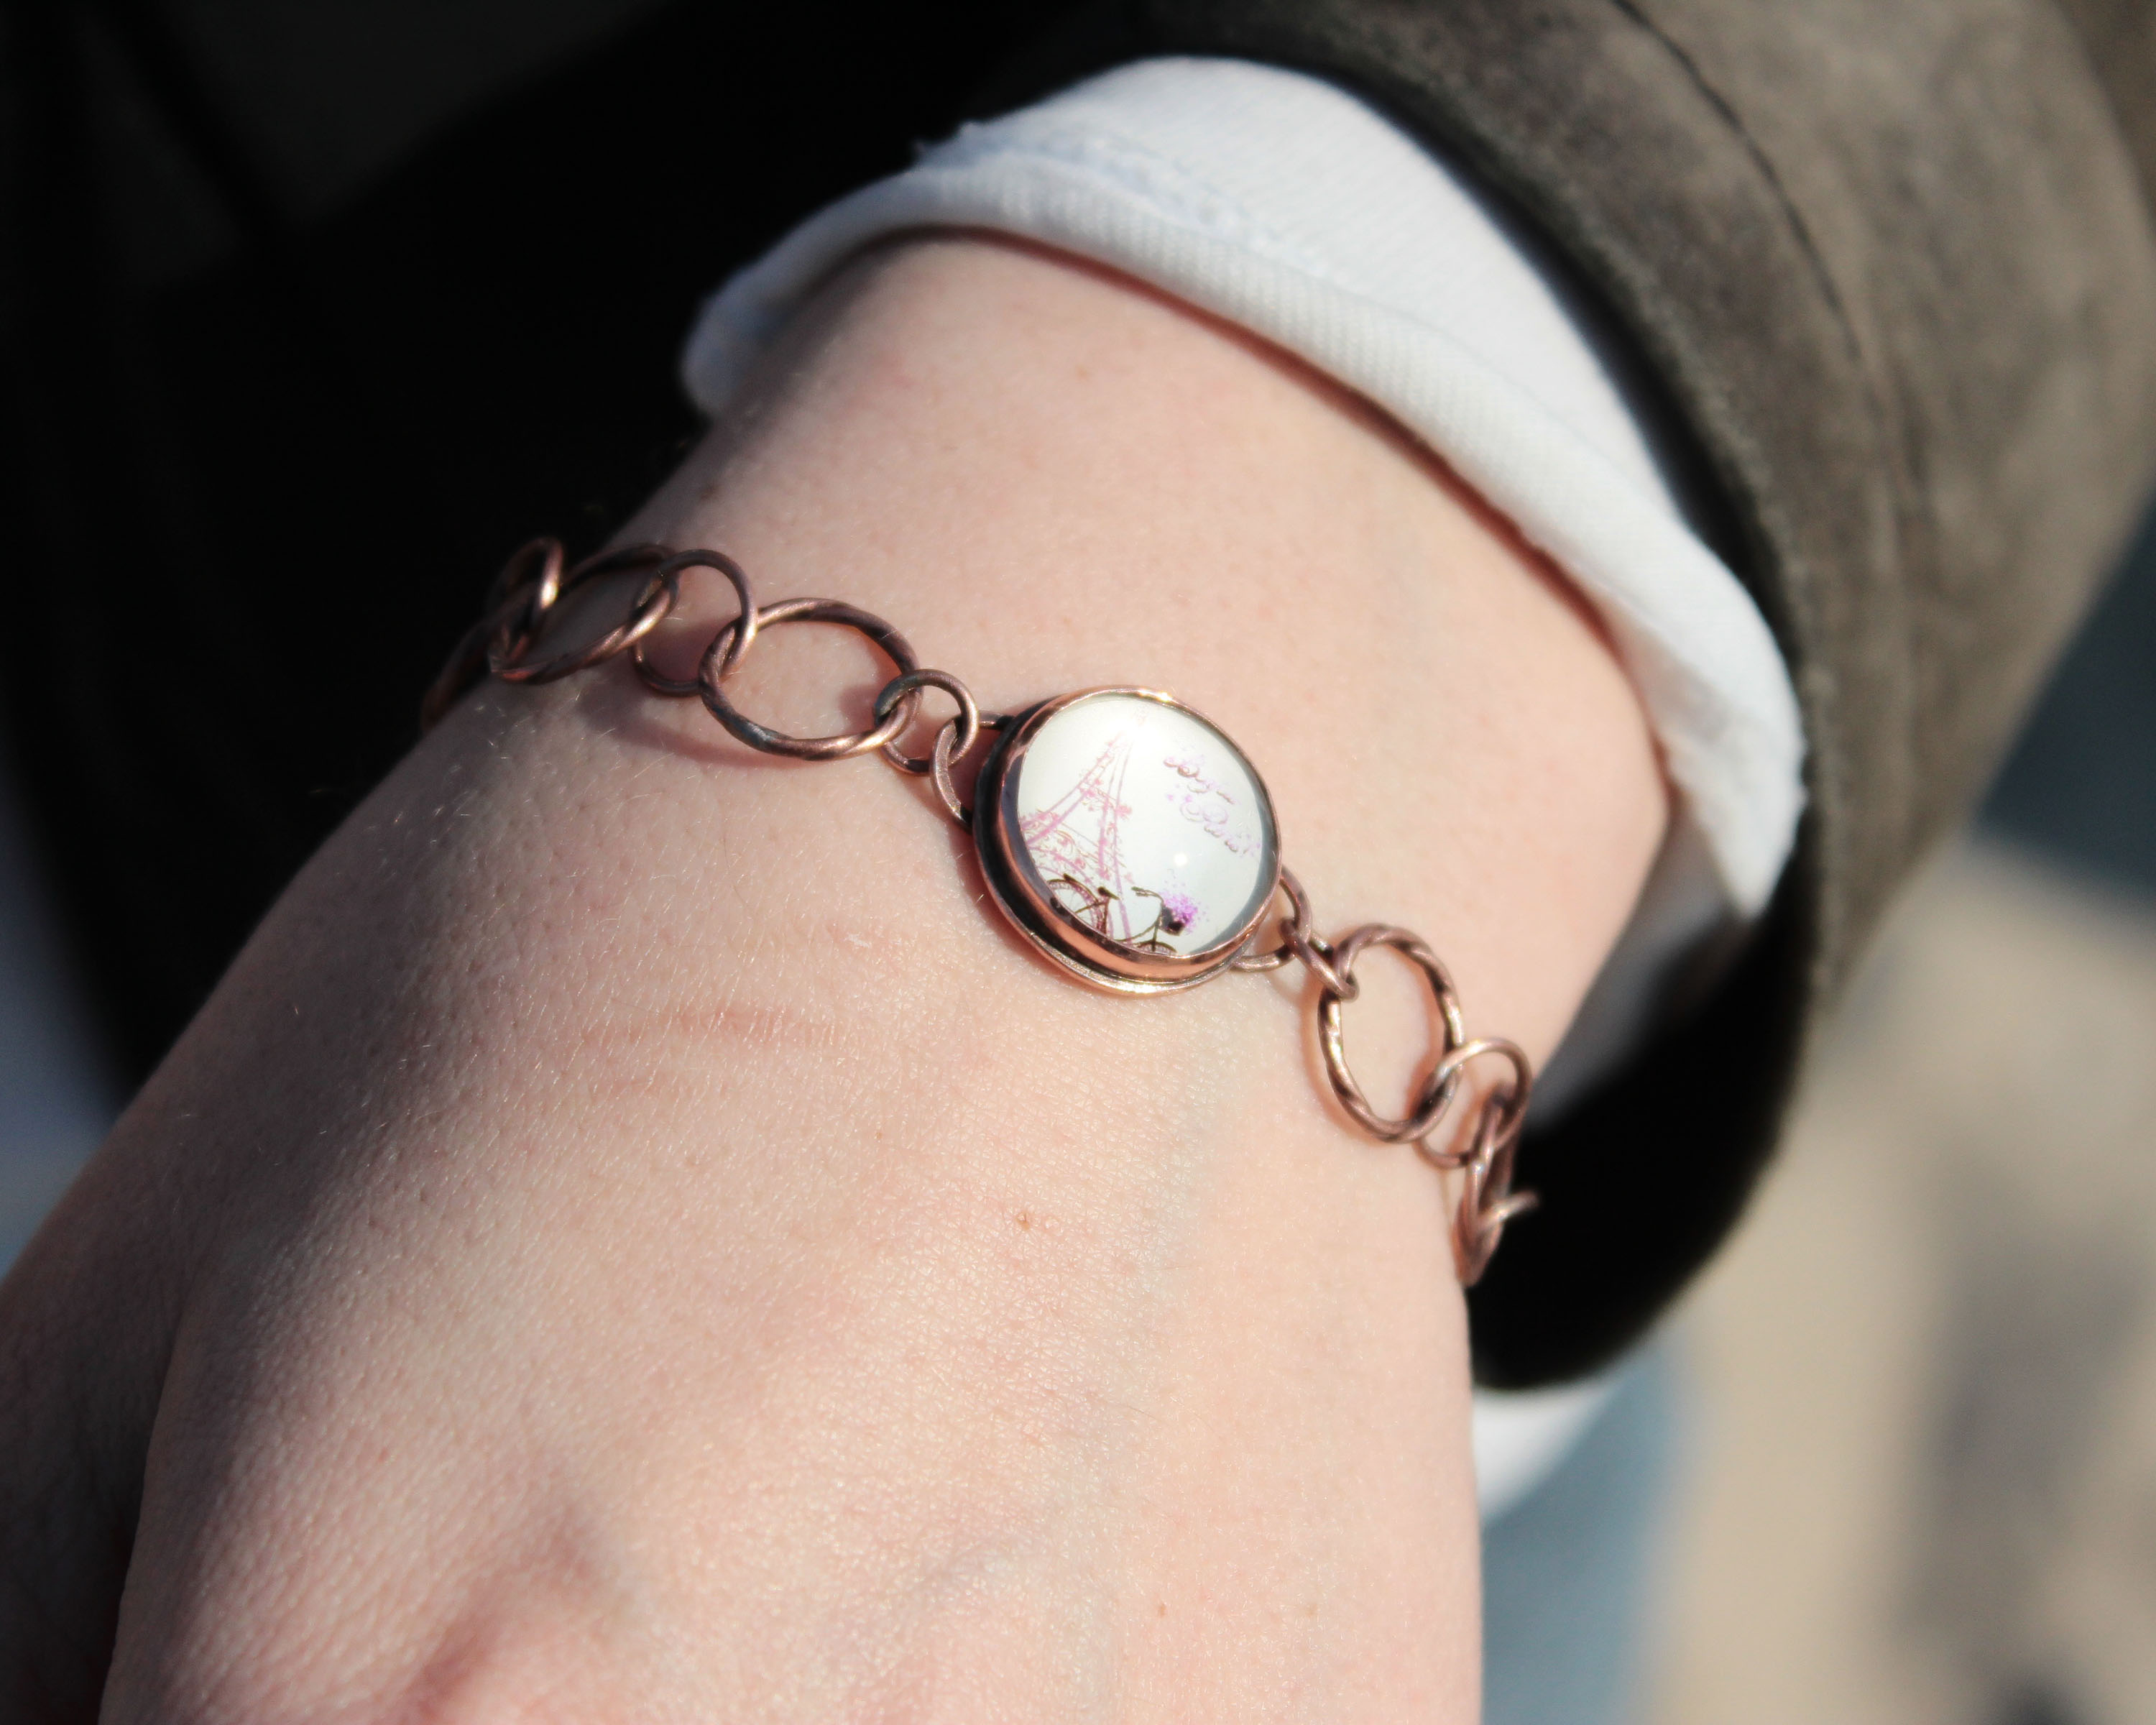 copper chain bracelet